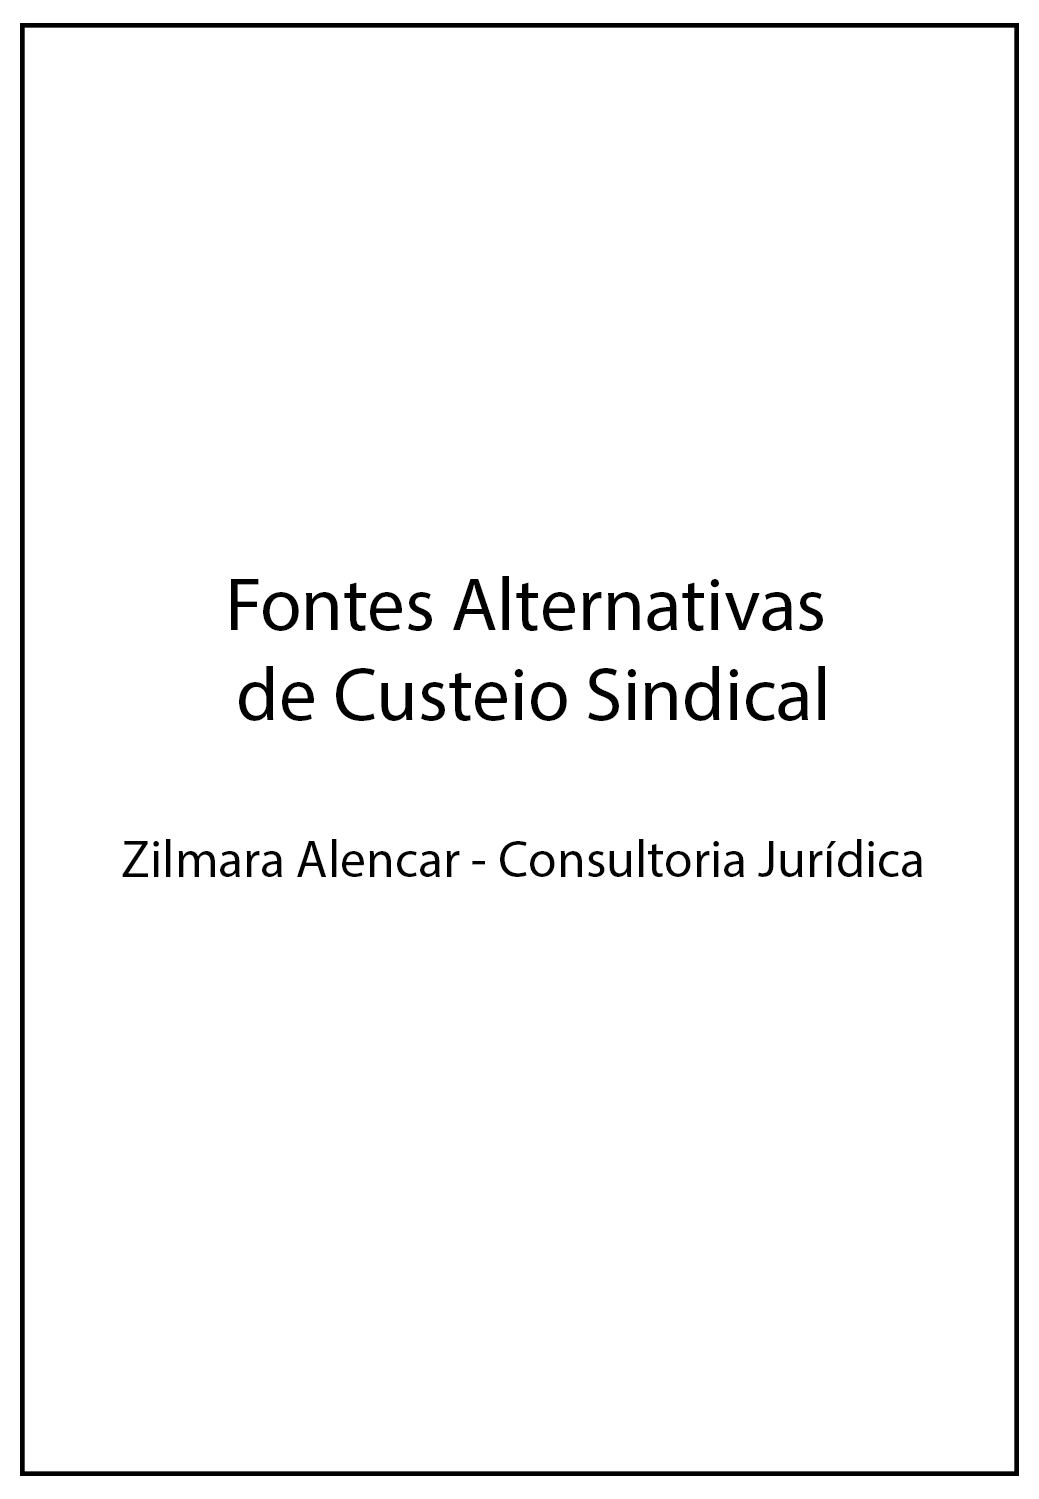 FONTES ALTERNATIVAS DE CUSTEIO SINDICAL